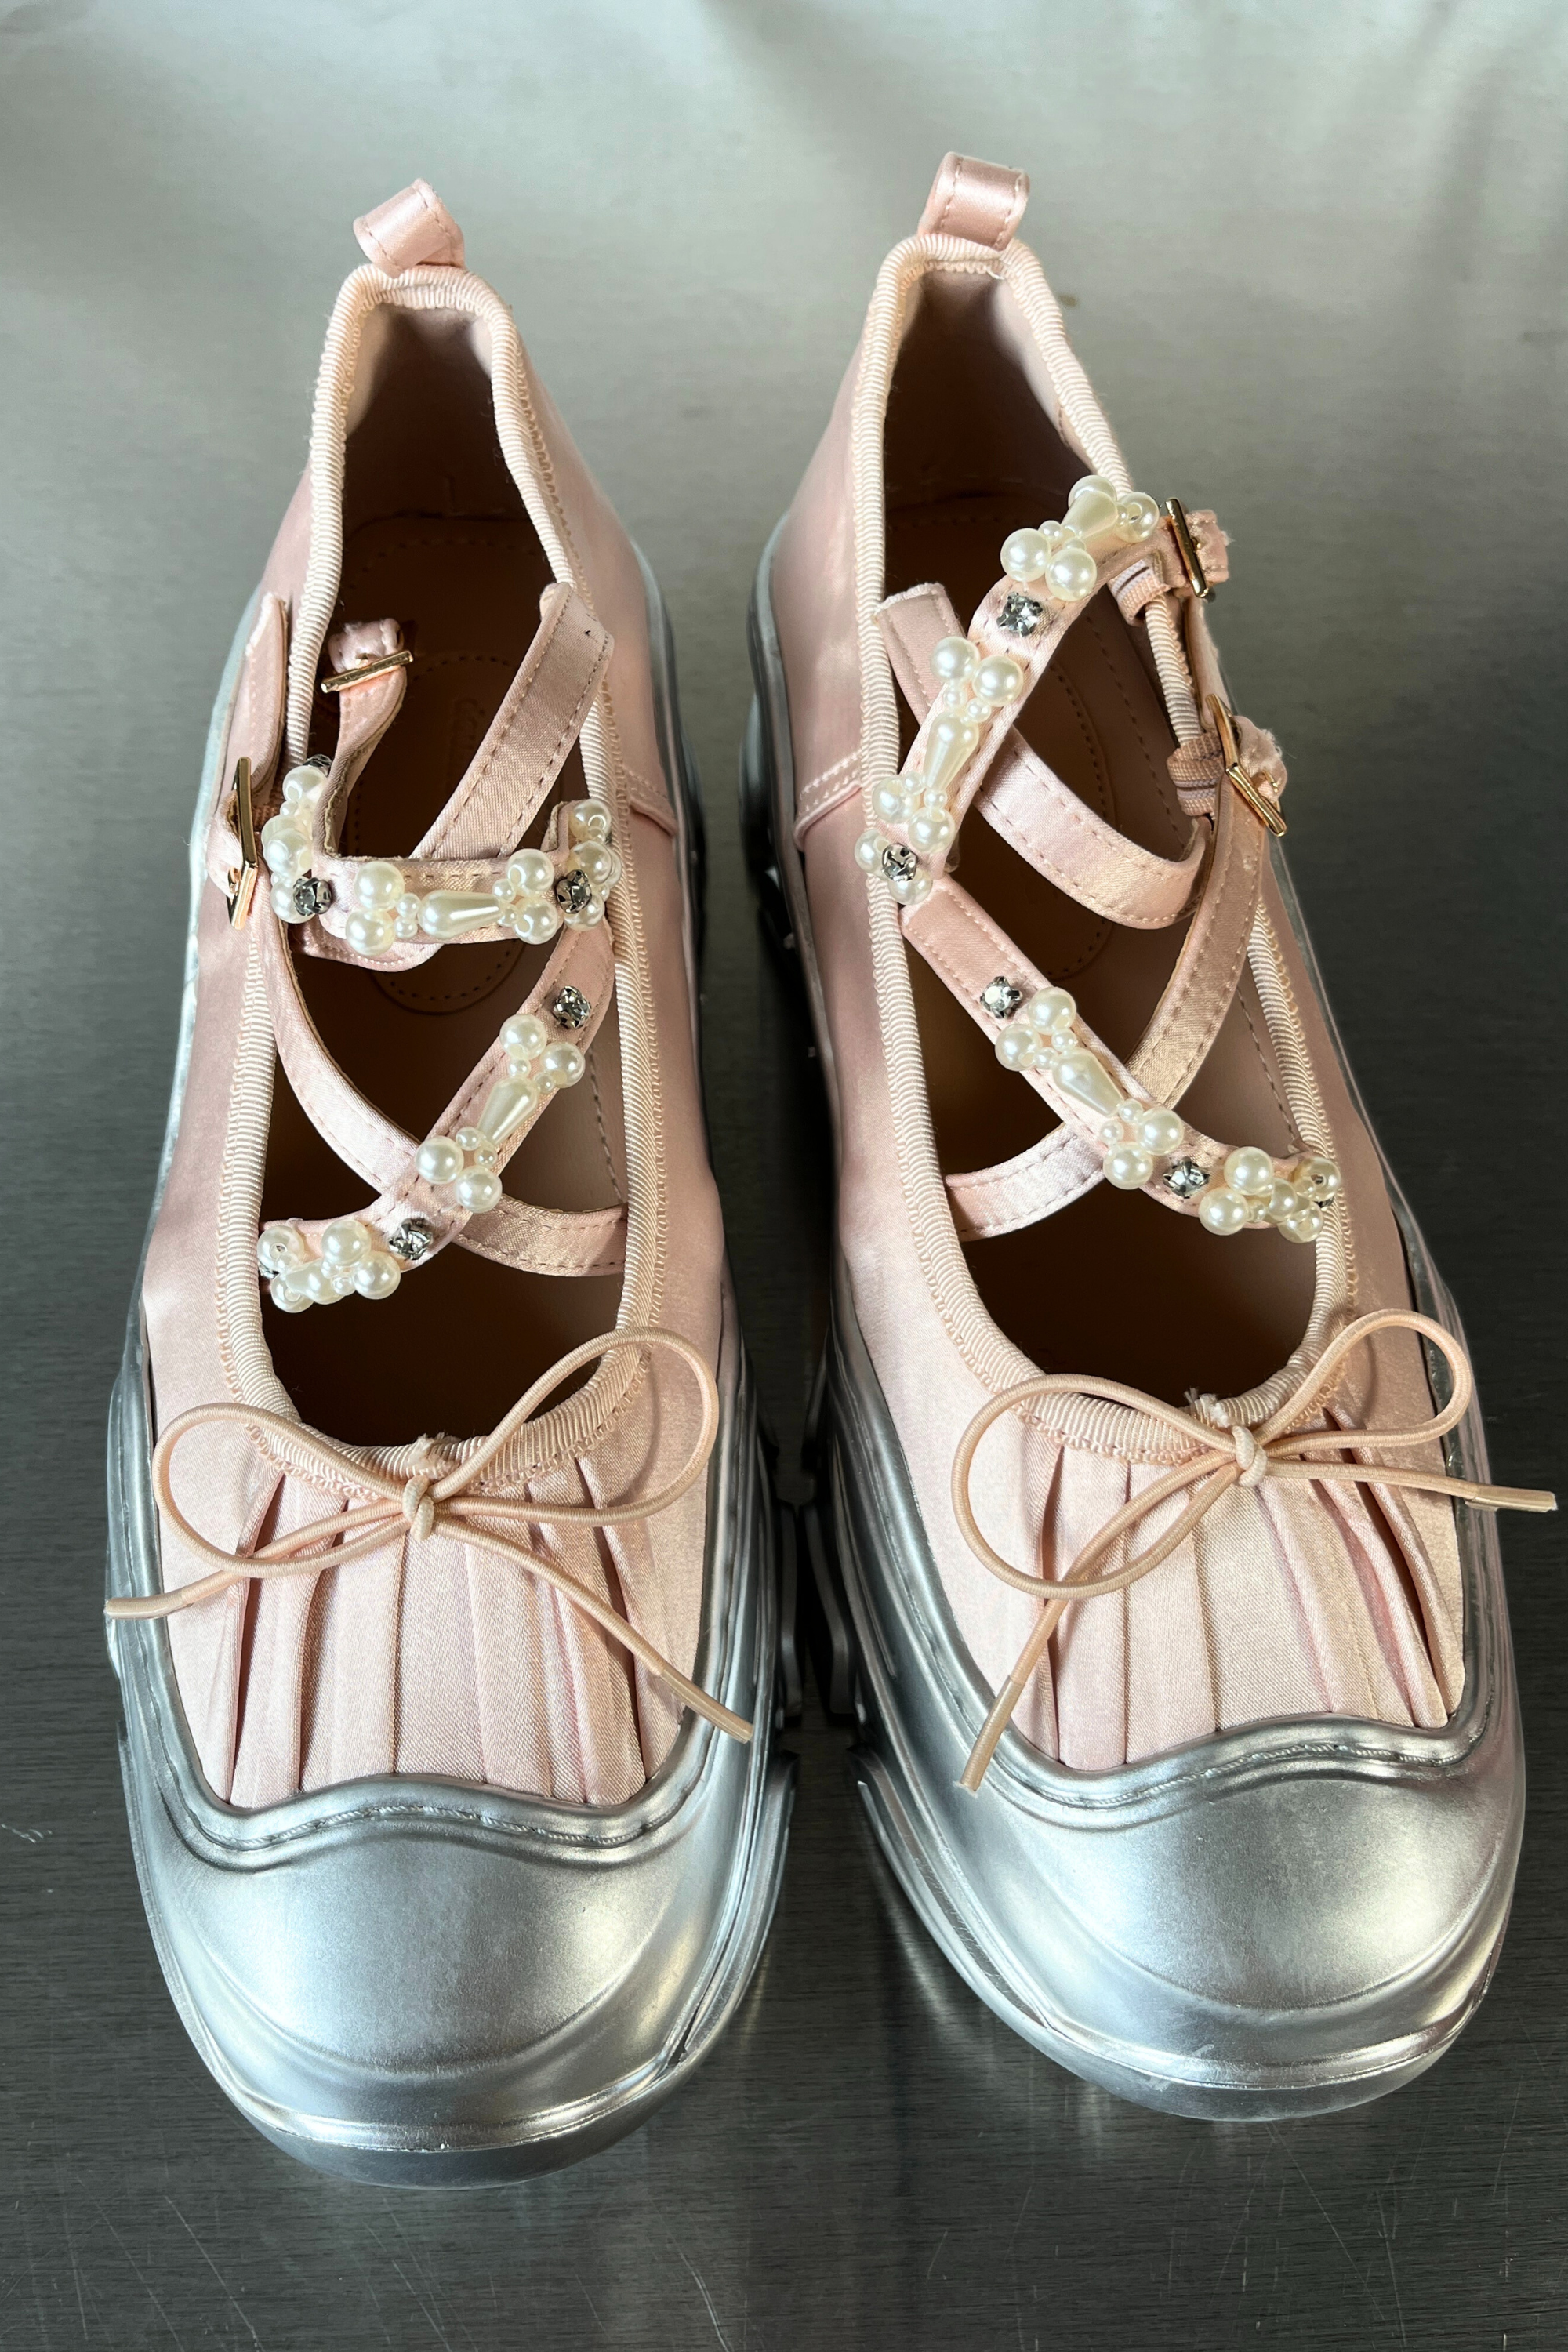 Ballet Sneakers - Pink/Silver